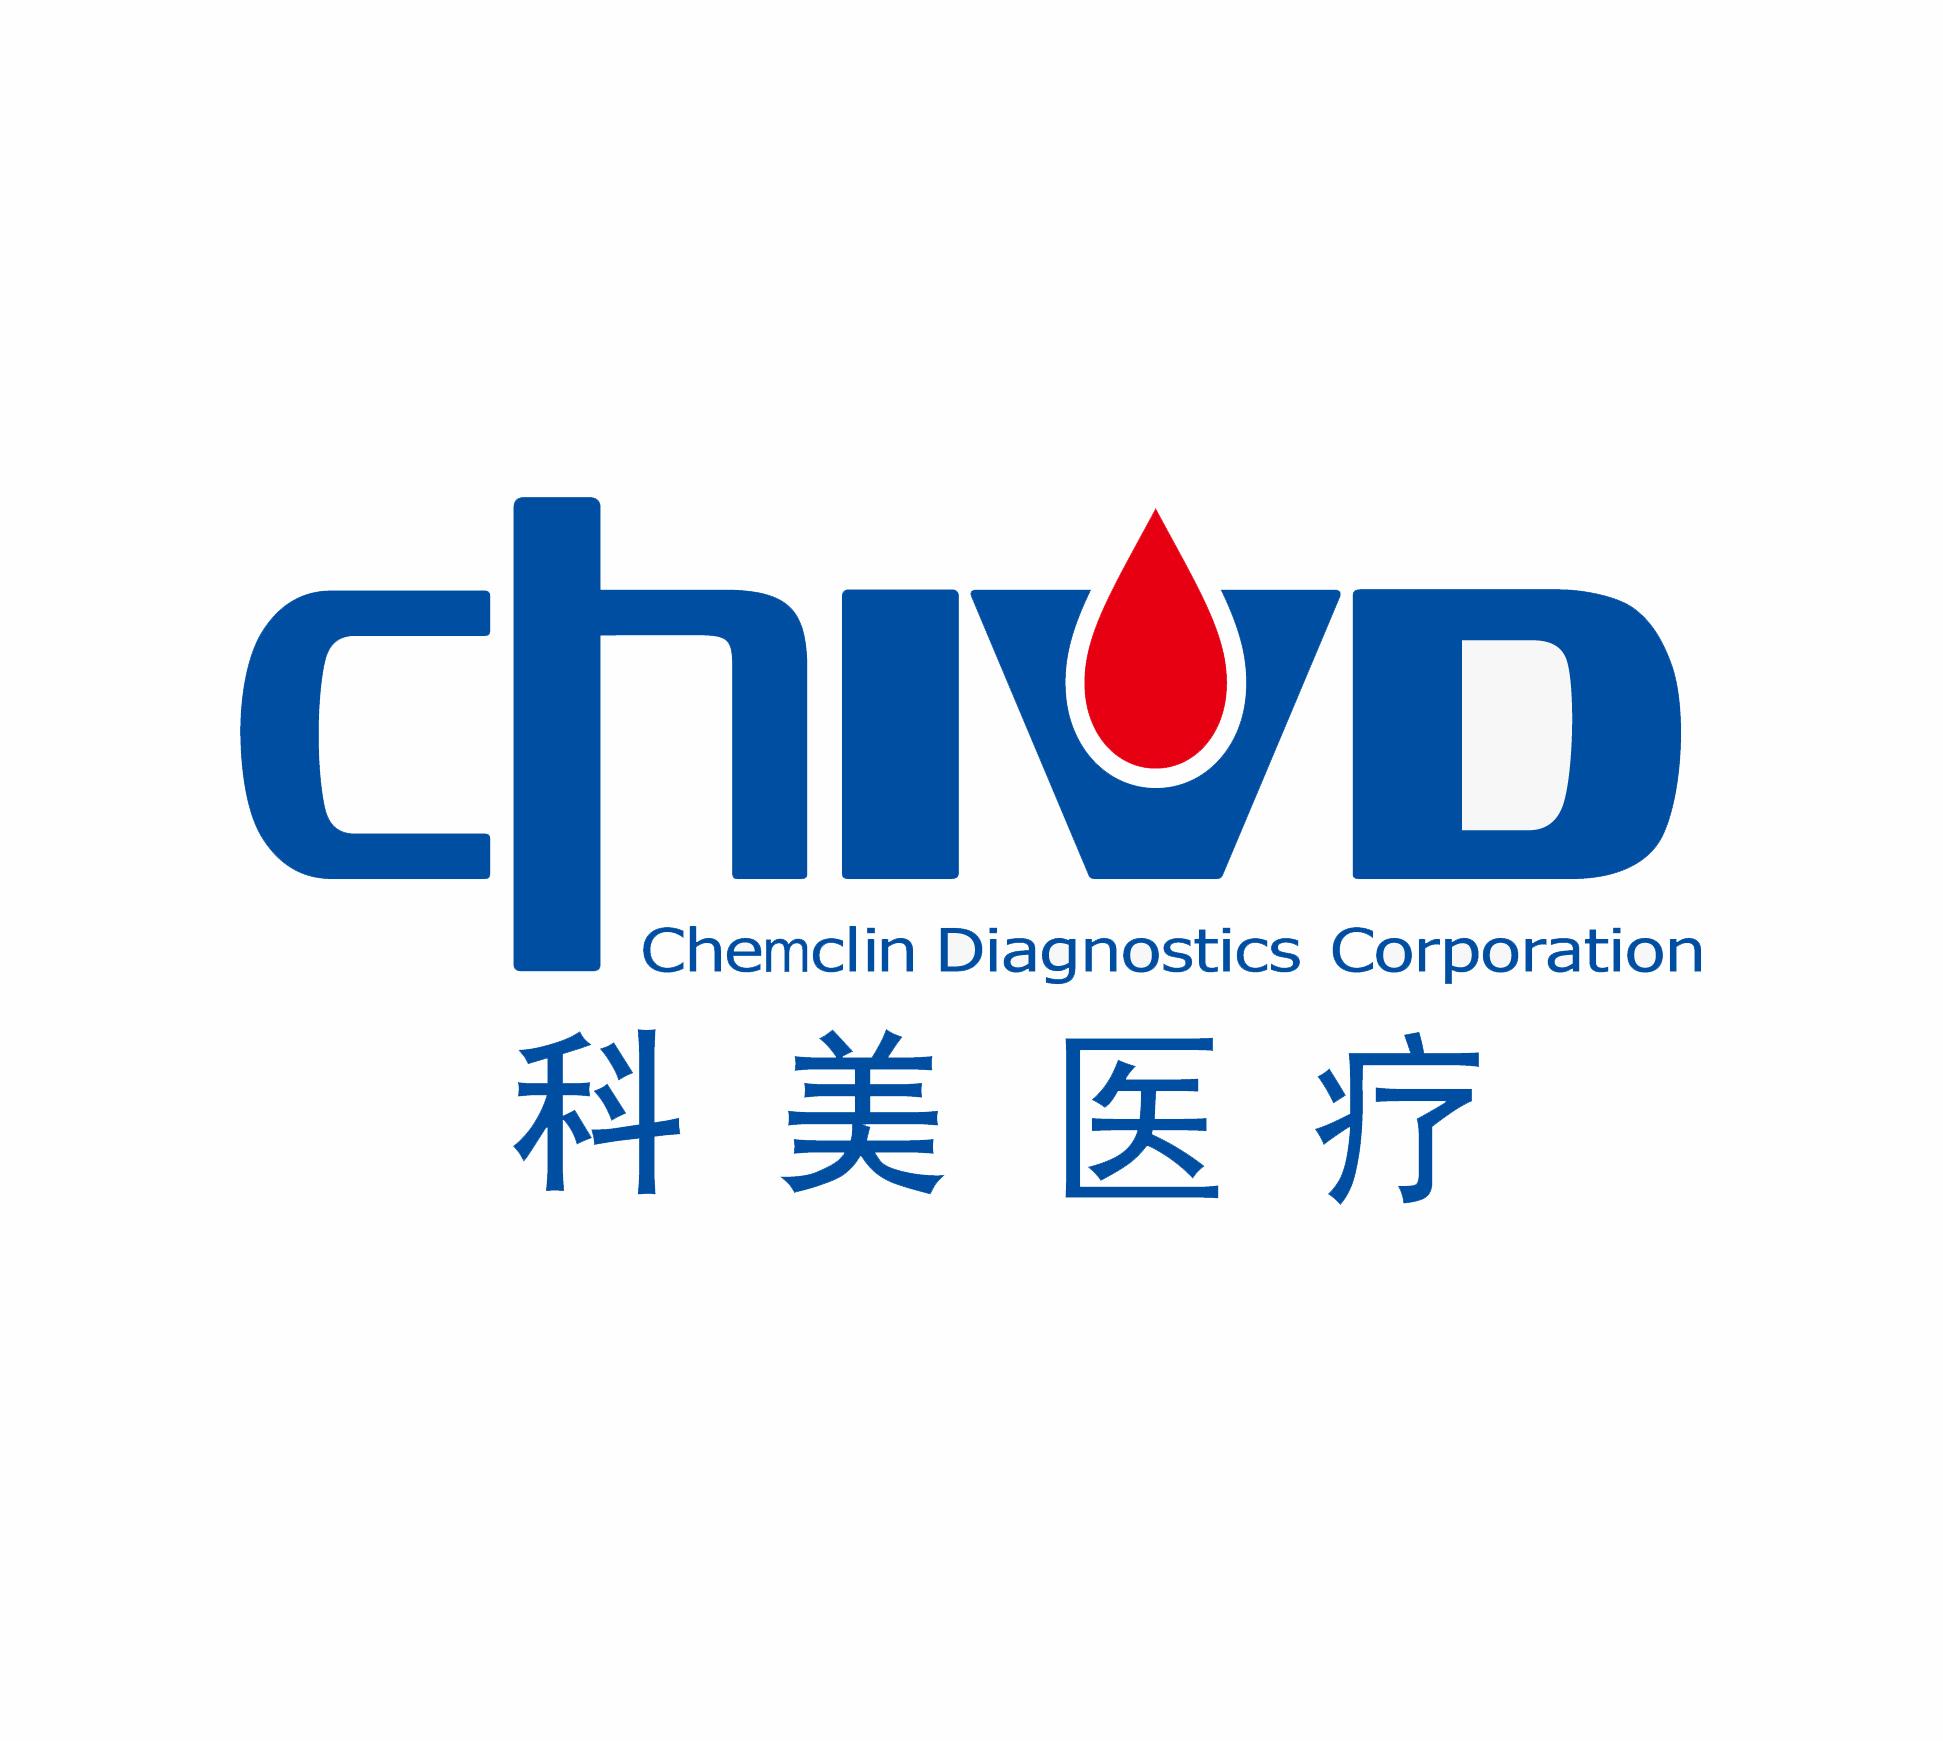 科美医疗 chivd chemclin diagnostics corporation商标公告